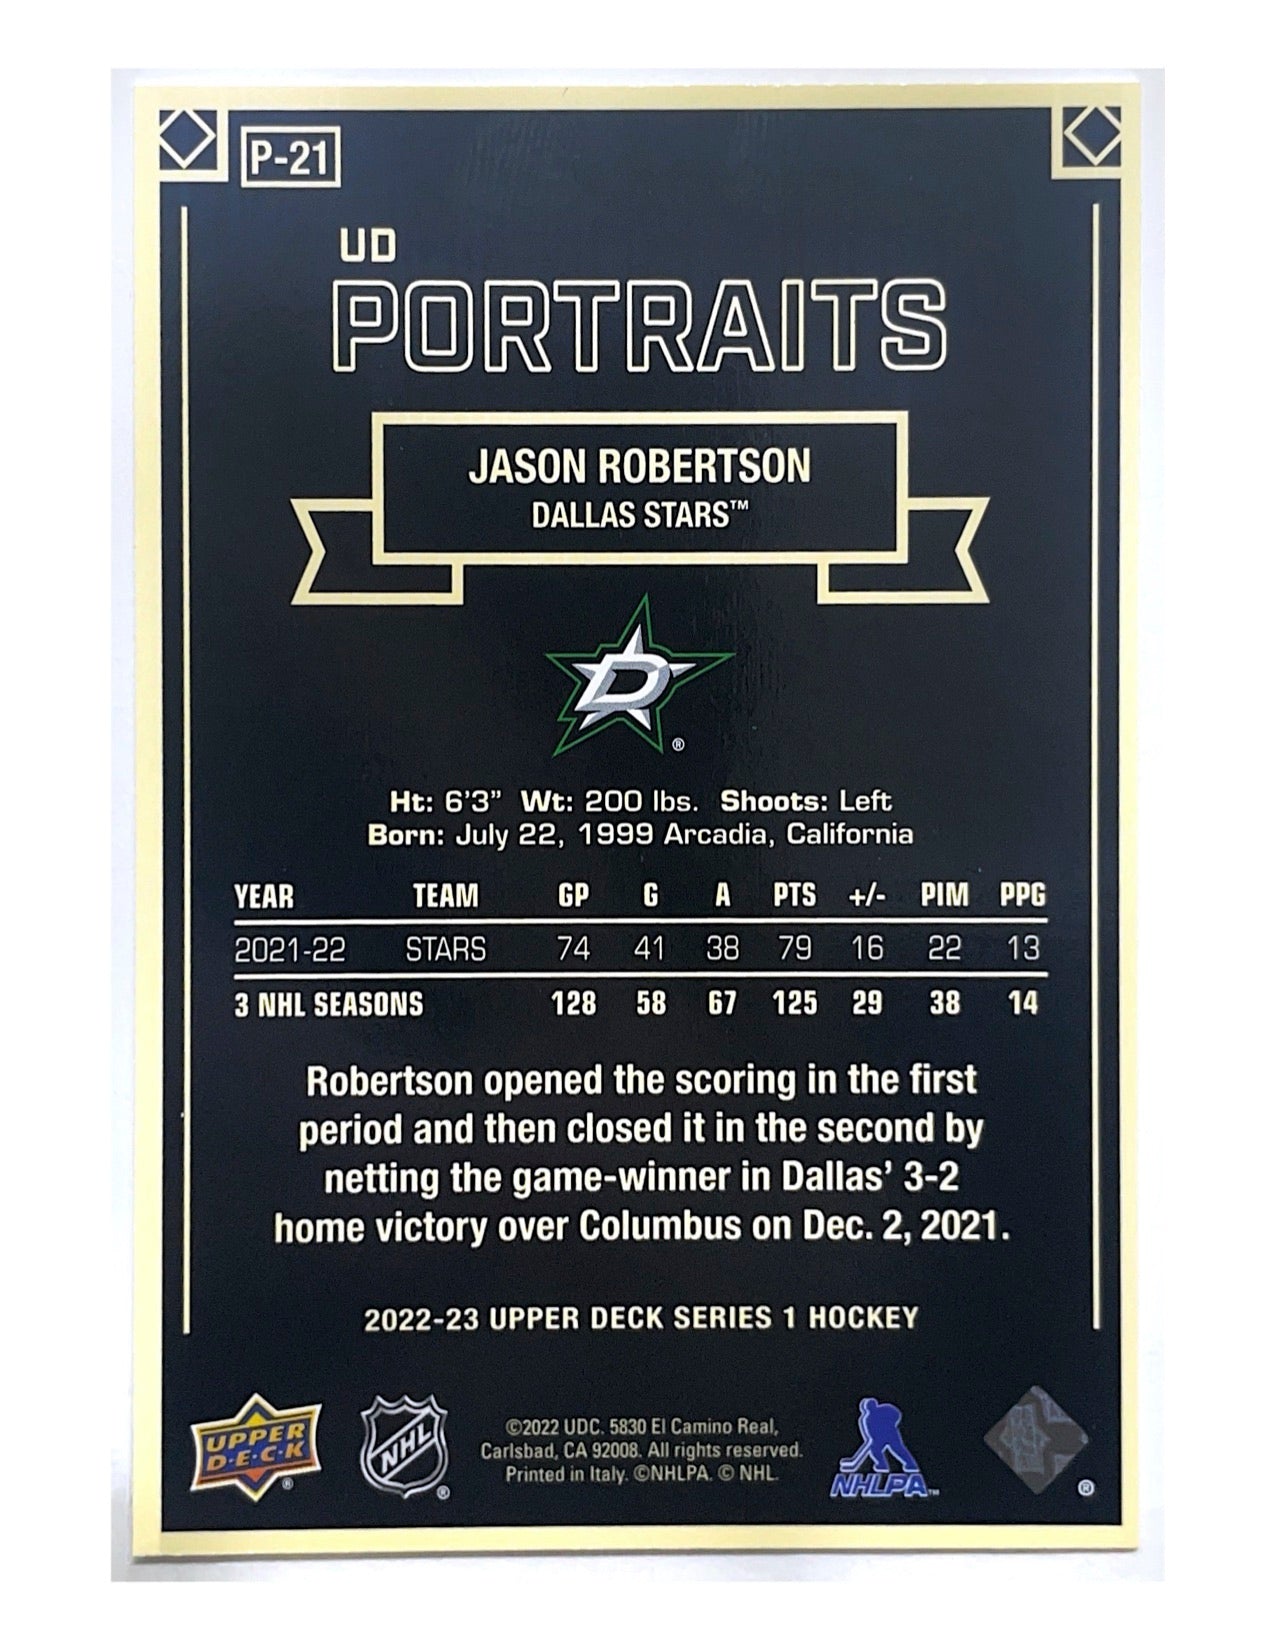 Jason Robertson 2022-23 Upper Deck Series 1 UD Portraits #P-21